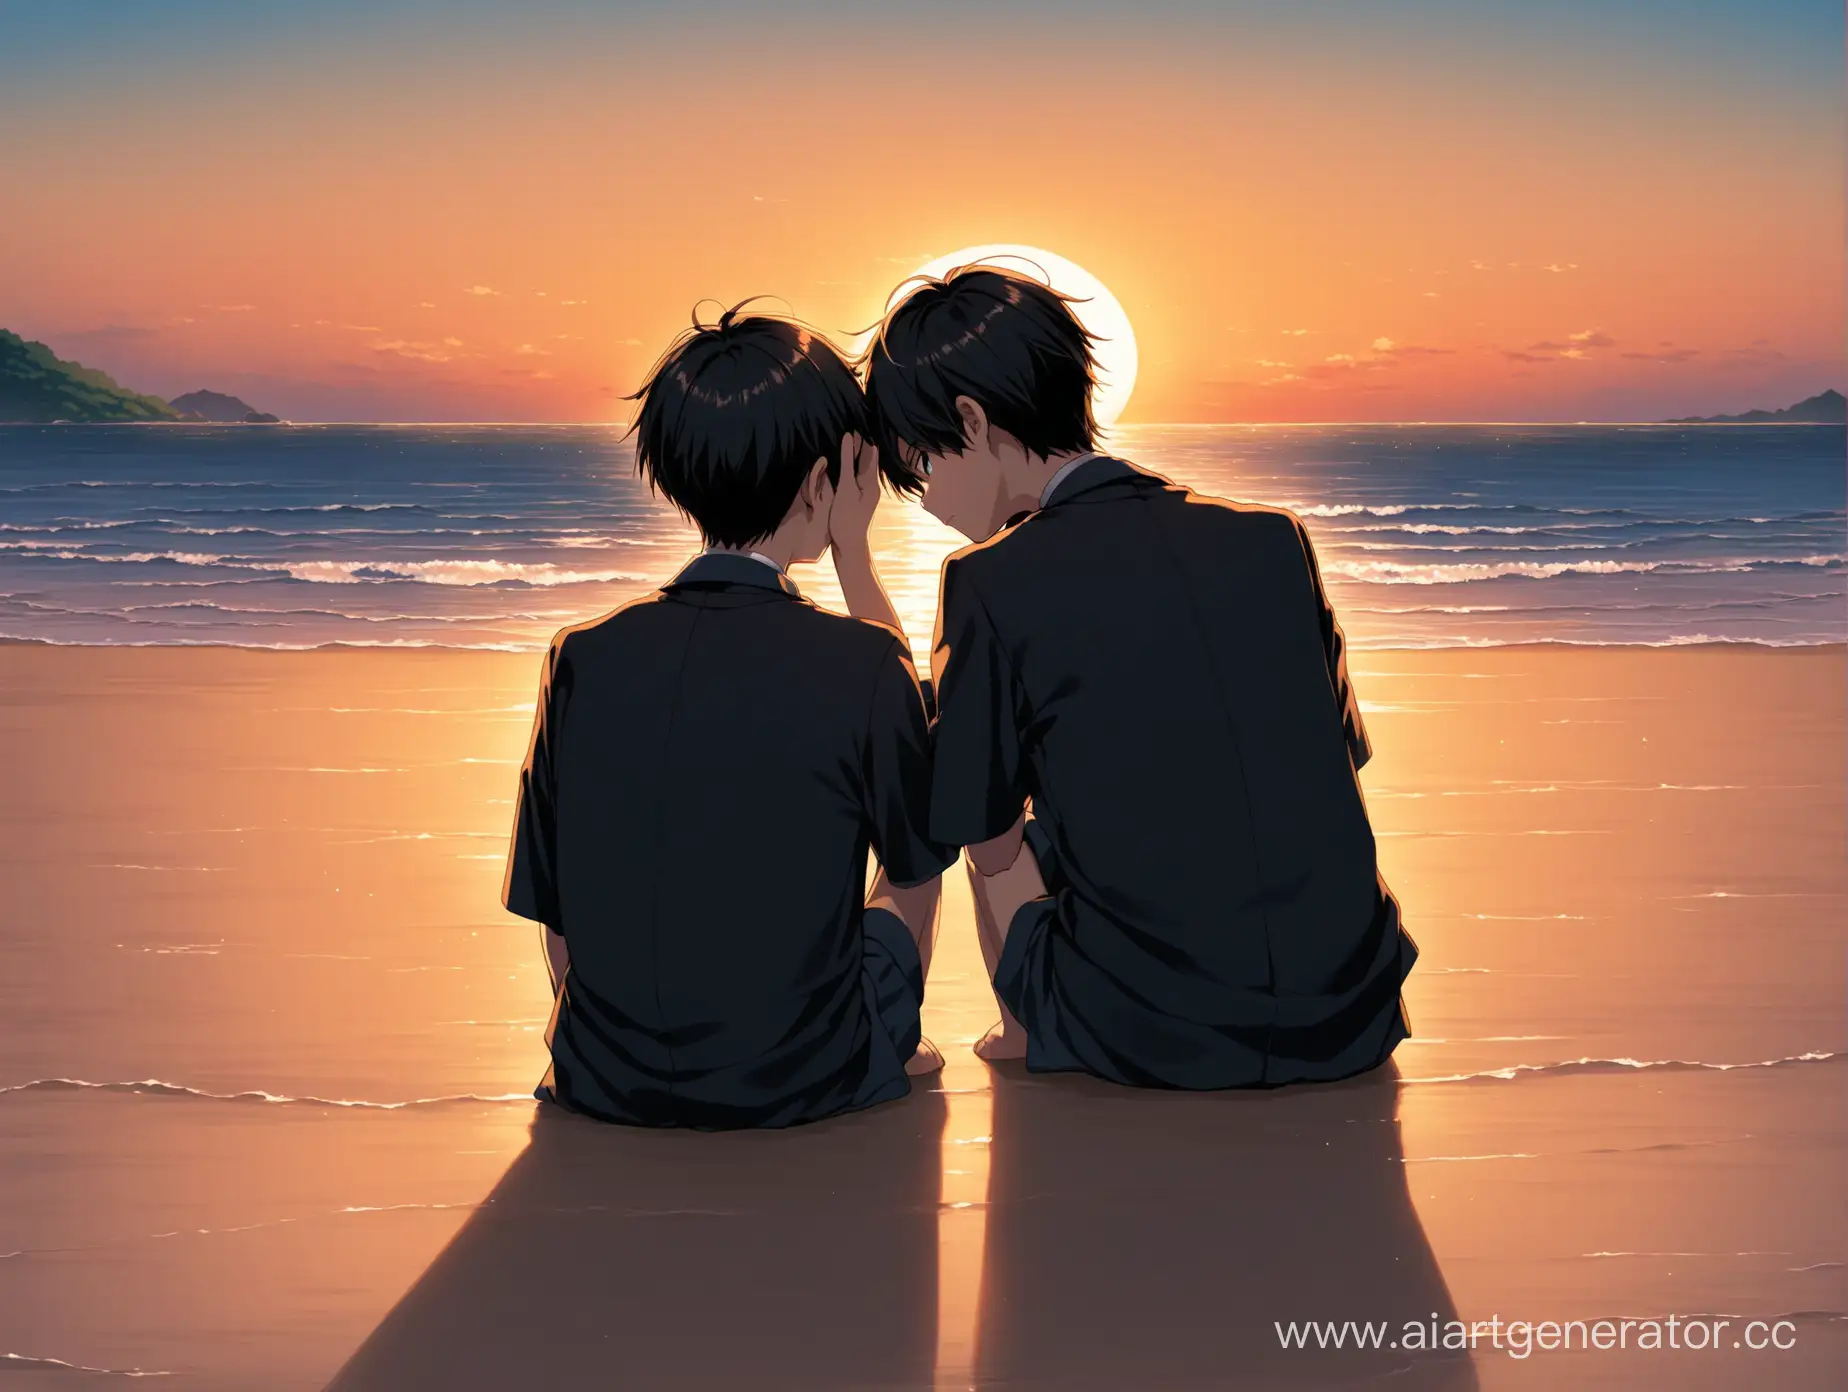 Japanese-Schoolboys-Watching-Sunset-on-Empty-Beach